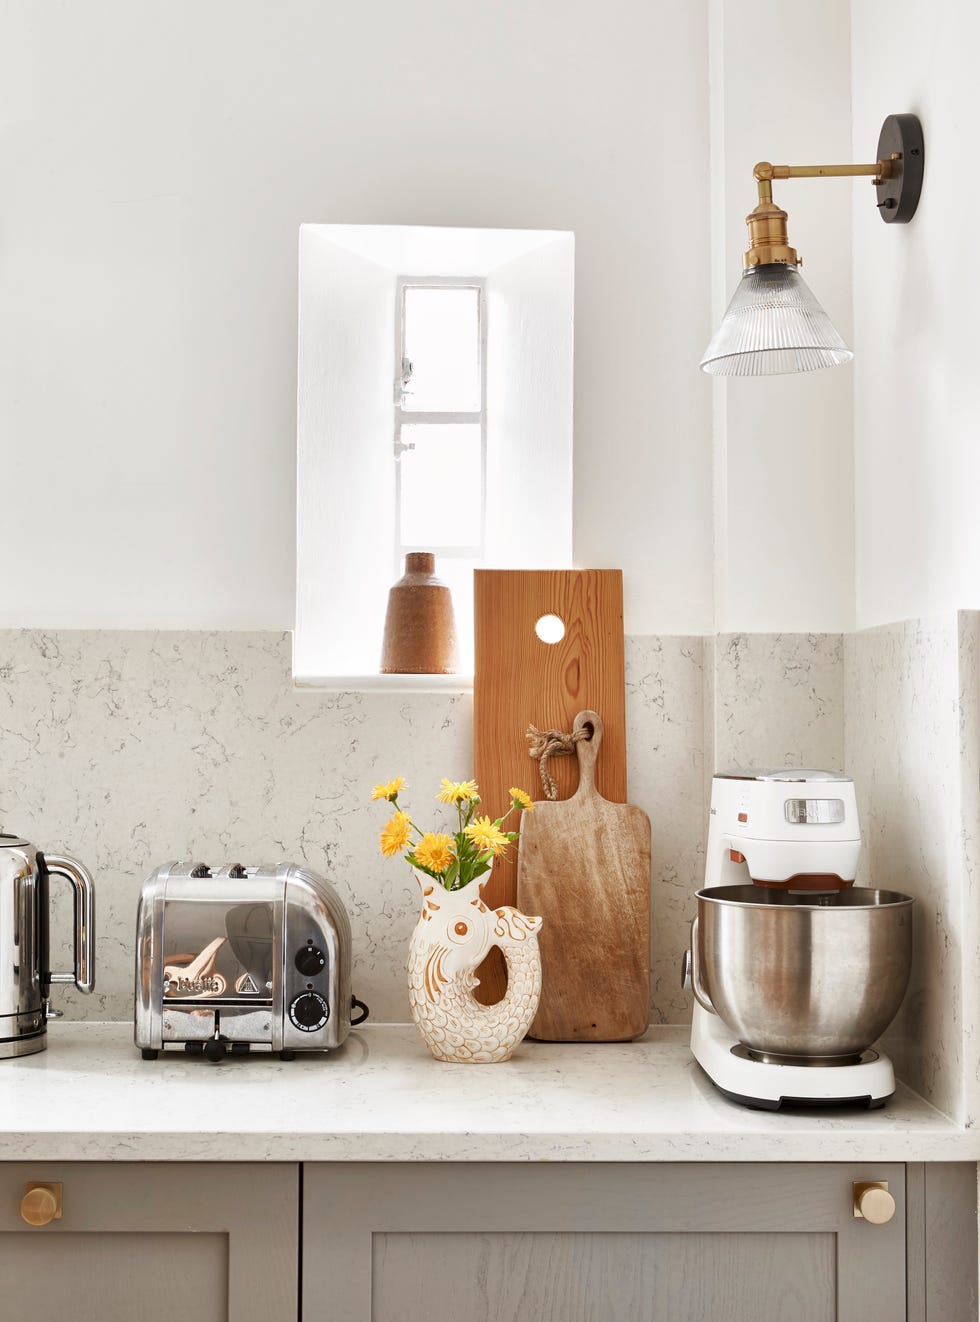 Soft grey kitchen cabinets, quartz worktops and splashback, appliances and a vase with fresh flowers